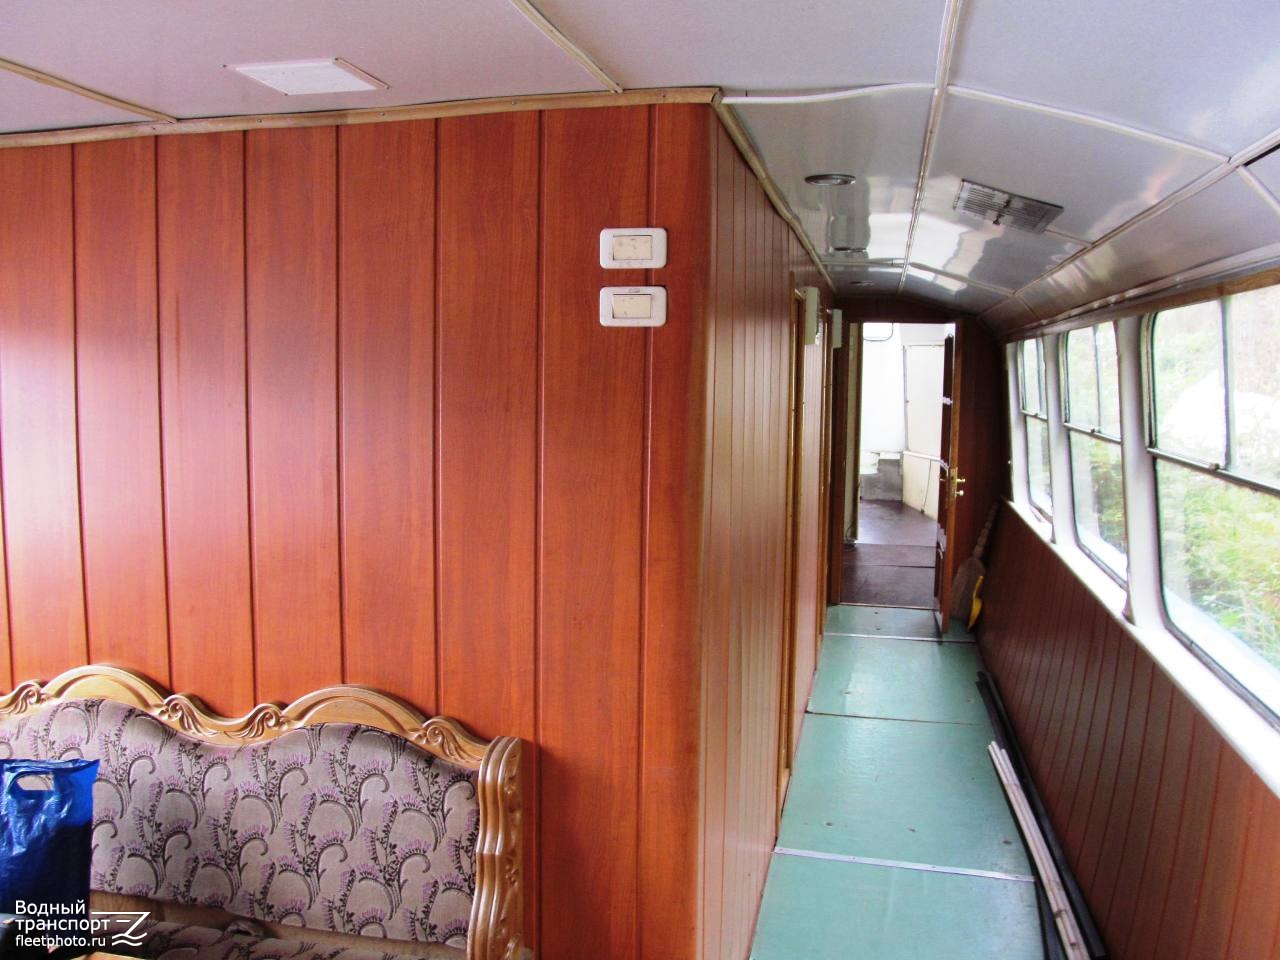 Р 25-28 МС. Internal compartments